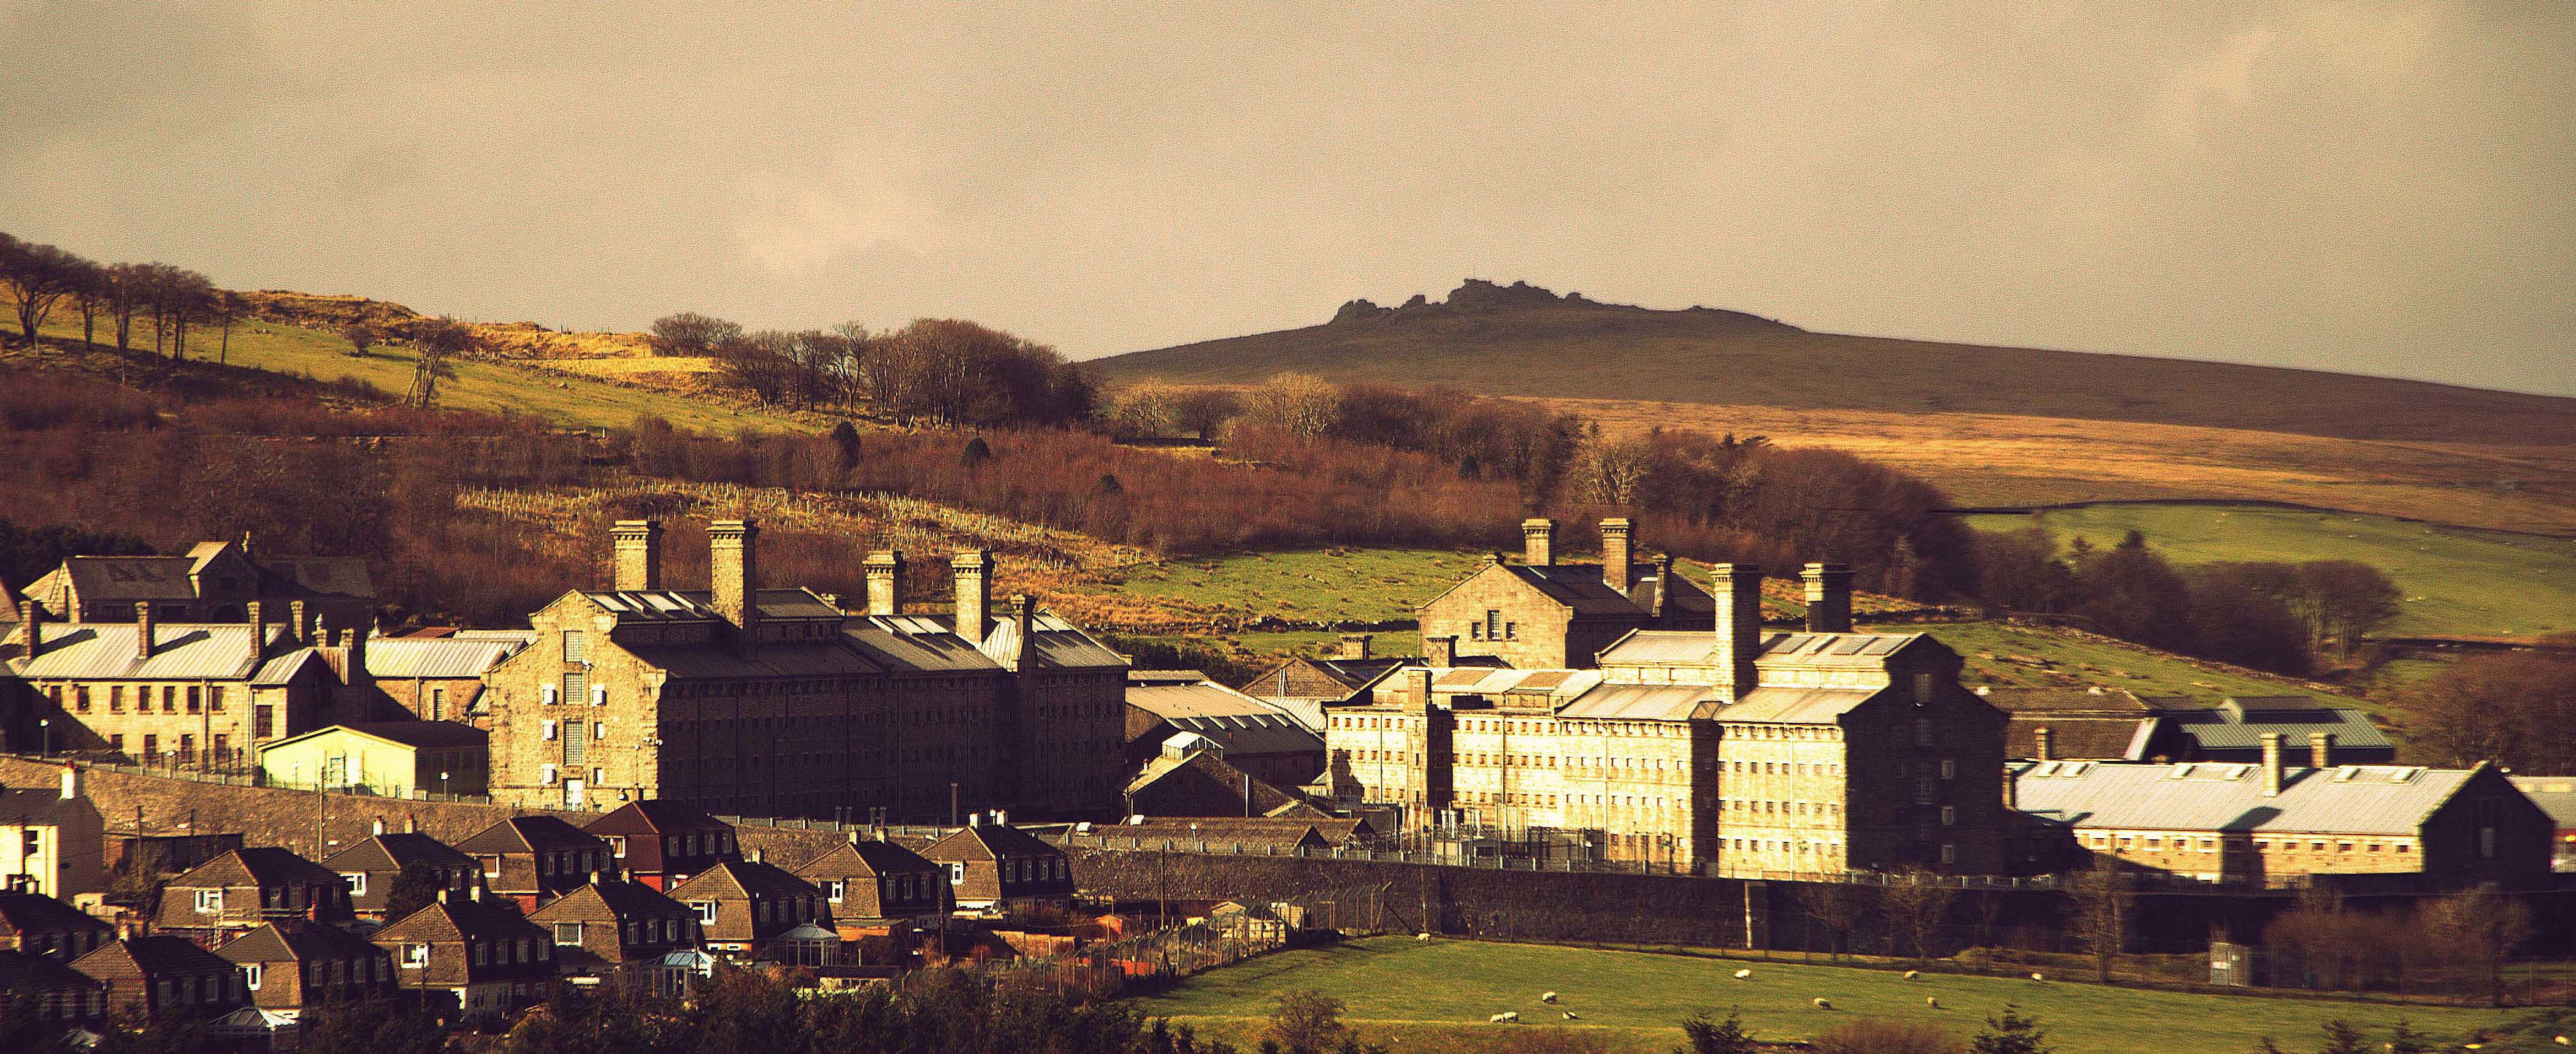 dartmoor prison tours